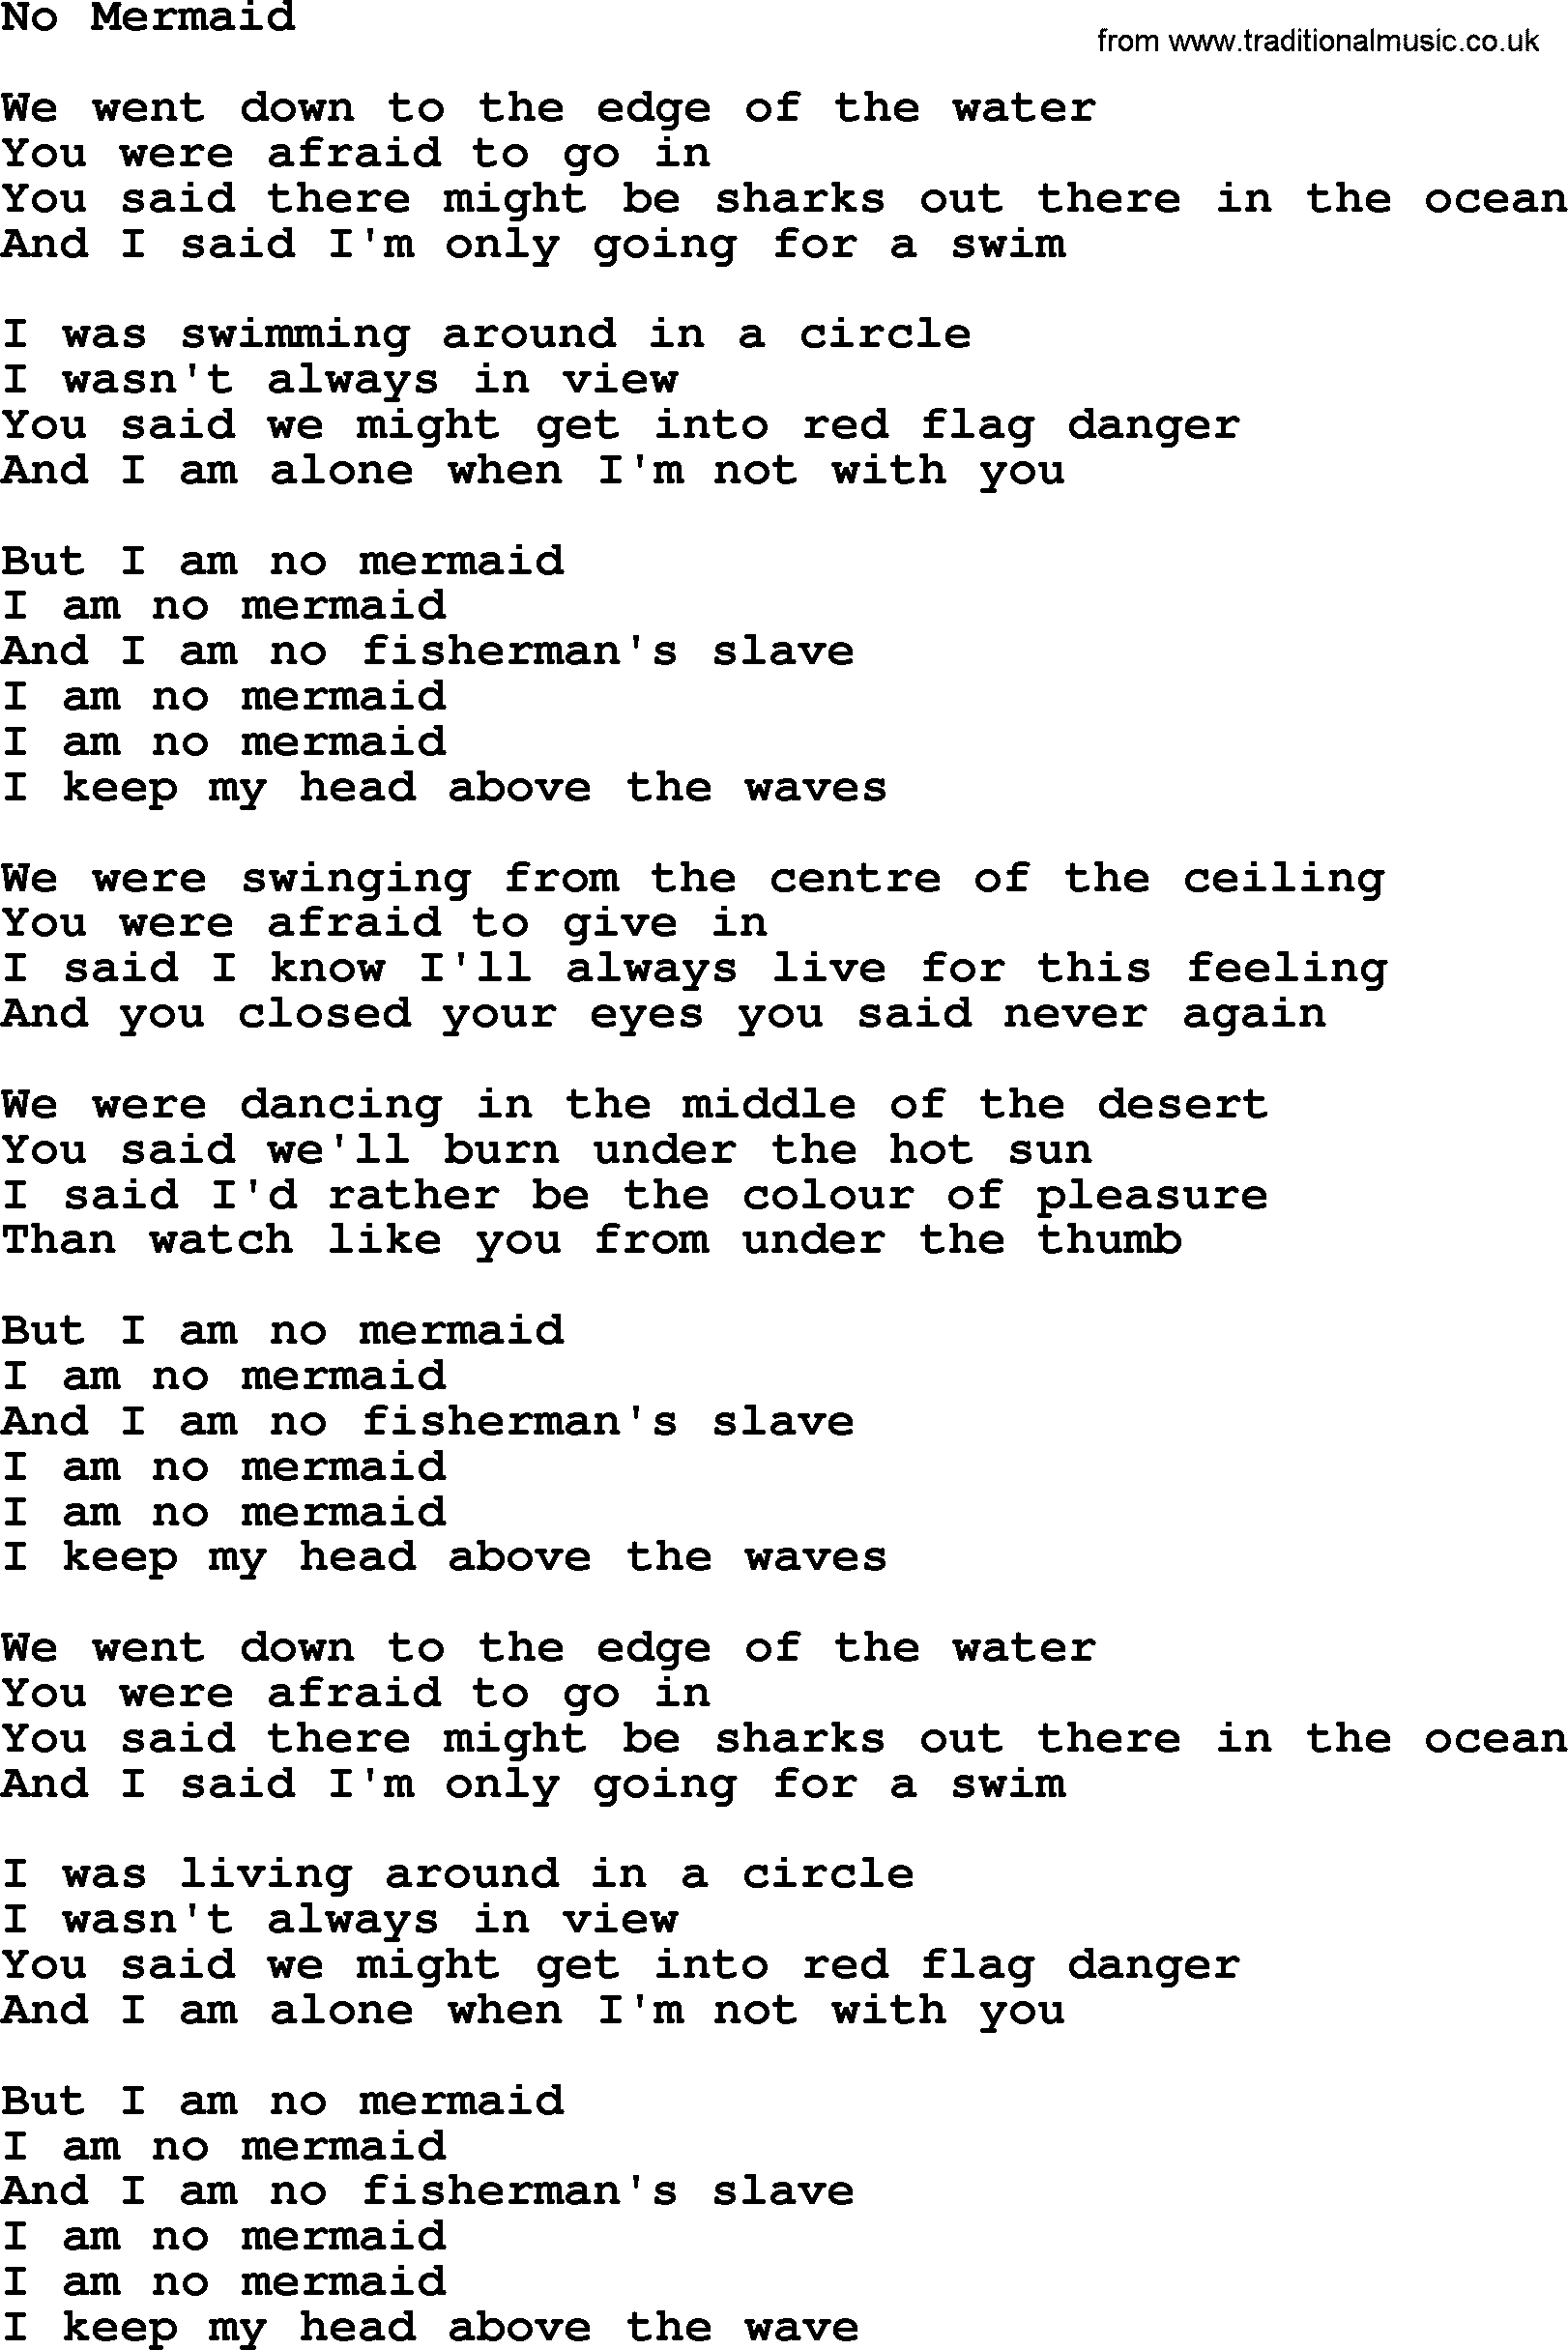 Joan Baez song No Mermaid, lyrics